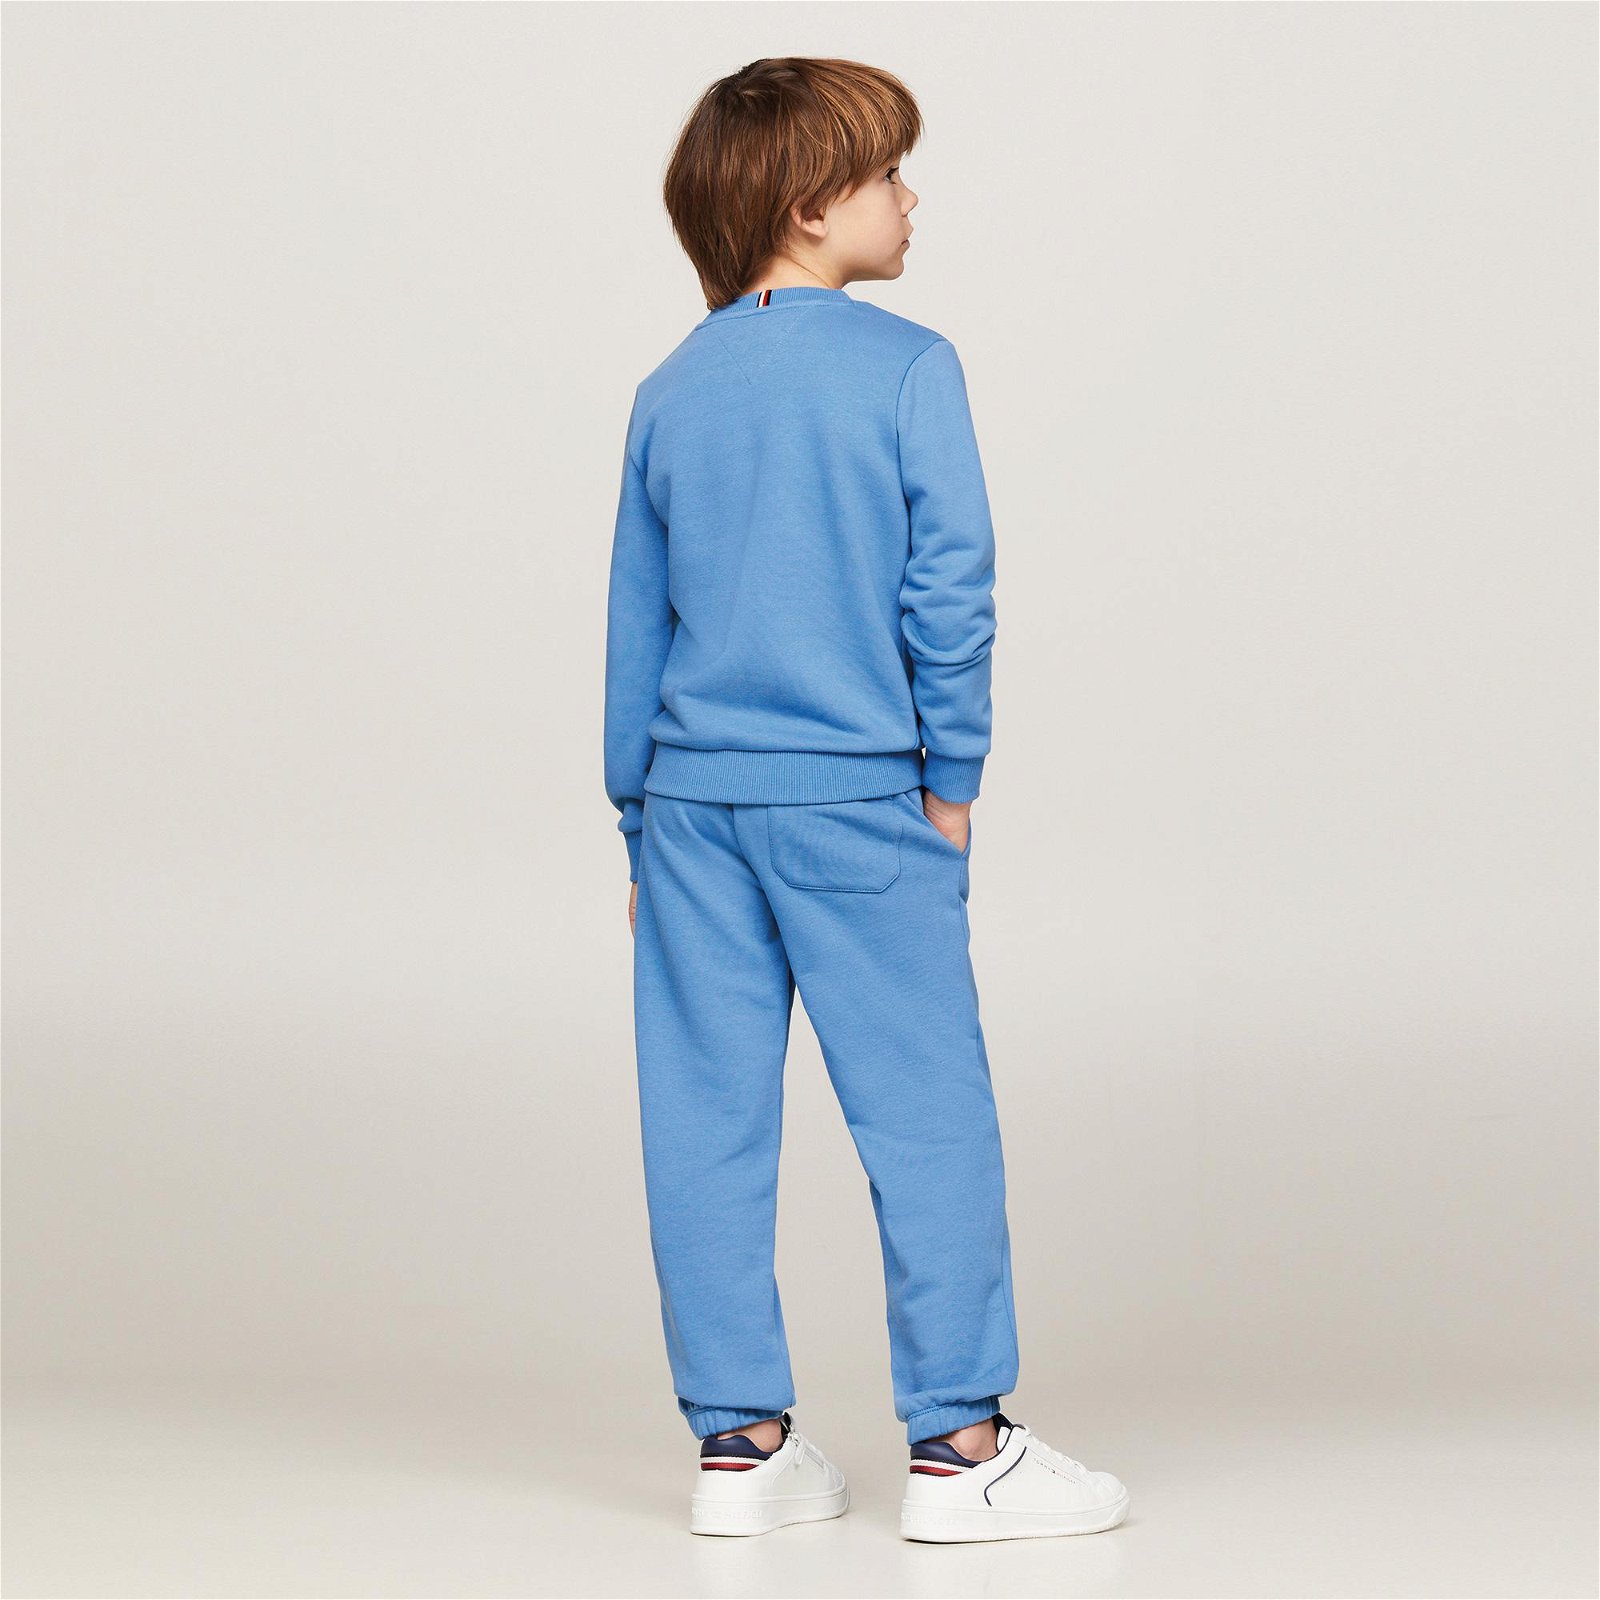 Tommy Hilfiger 1985 Erkek Çocuk Mavi Sweatshirt